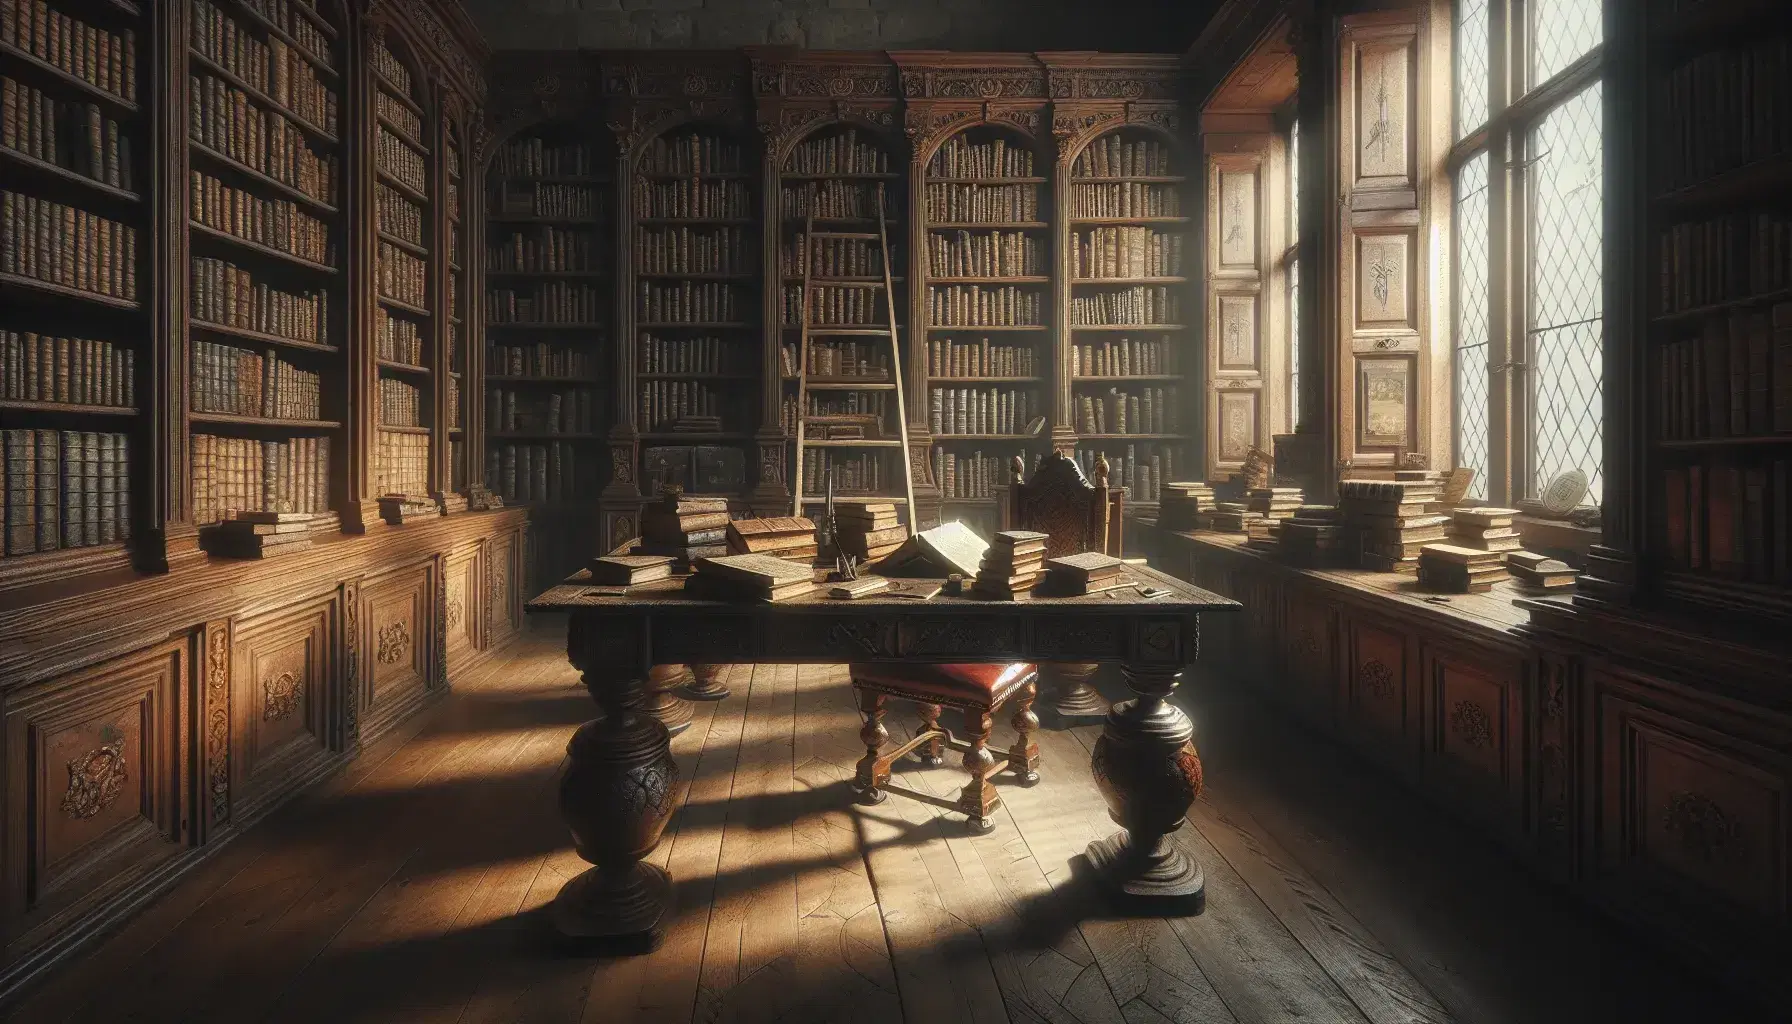 Biblioteca antigua con mesa de madera oscura y libros antiguos, estantería repleta, escalera, ventana que ilumina y cuadro de paisaje.